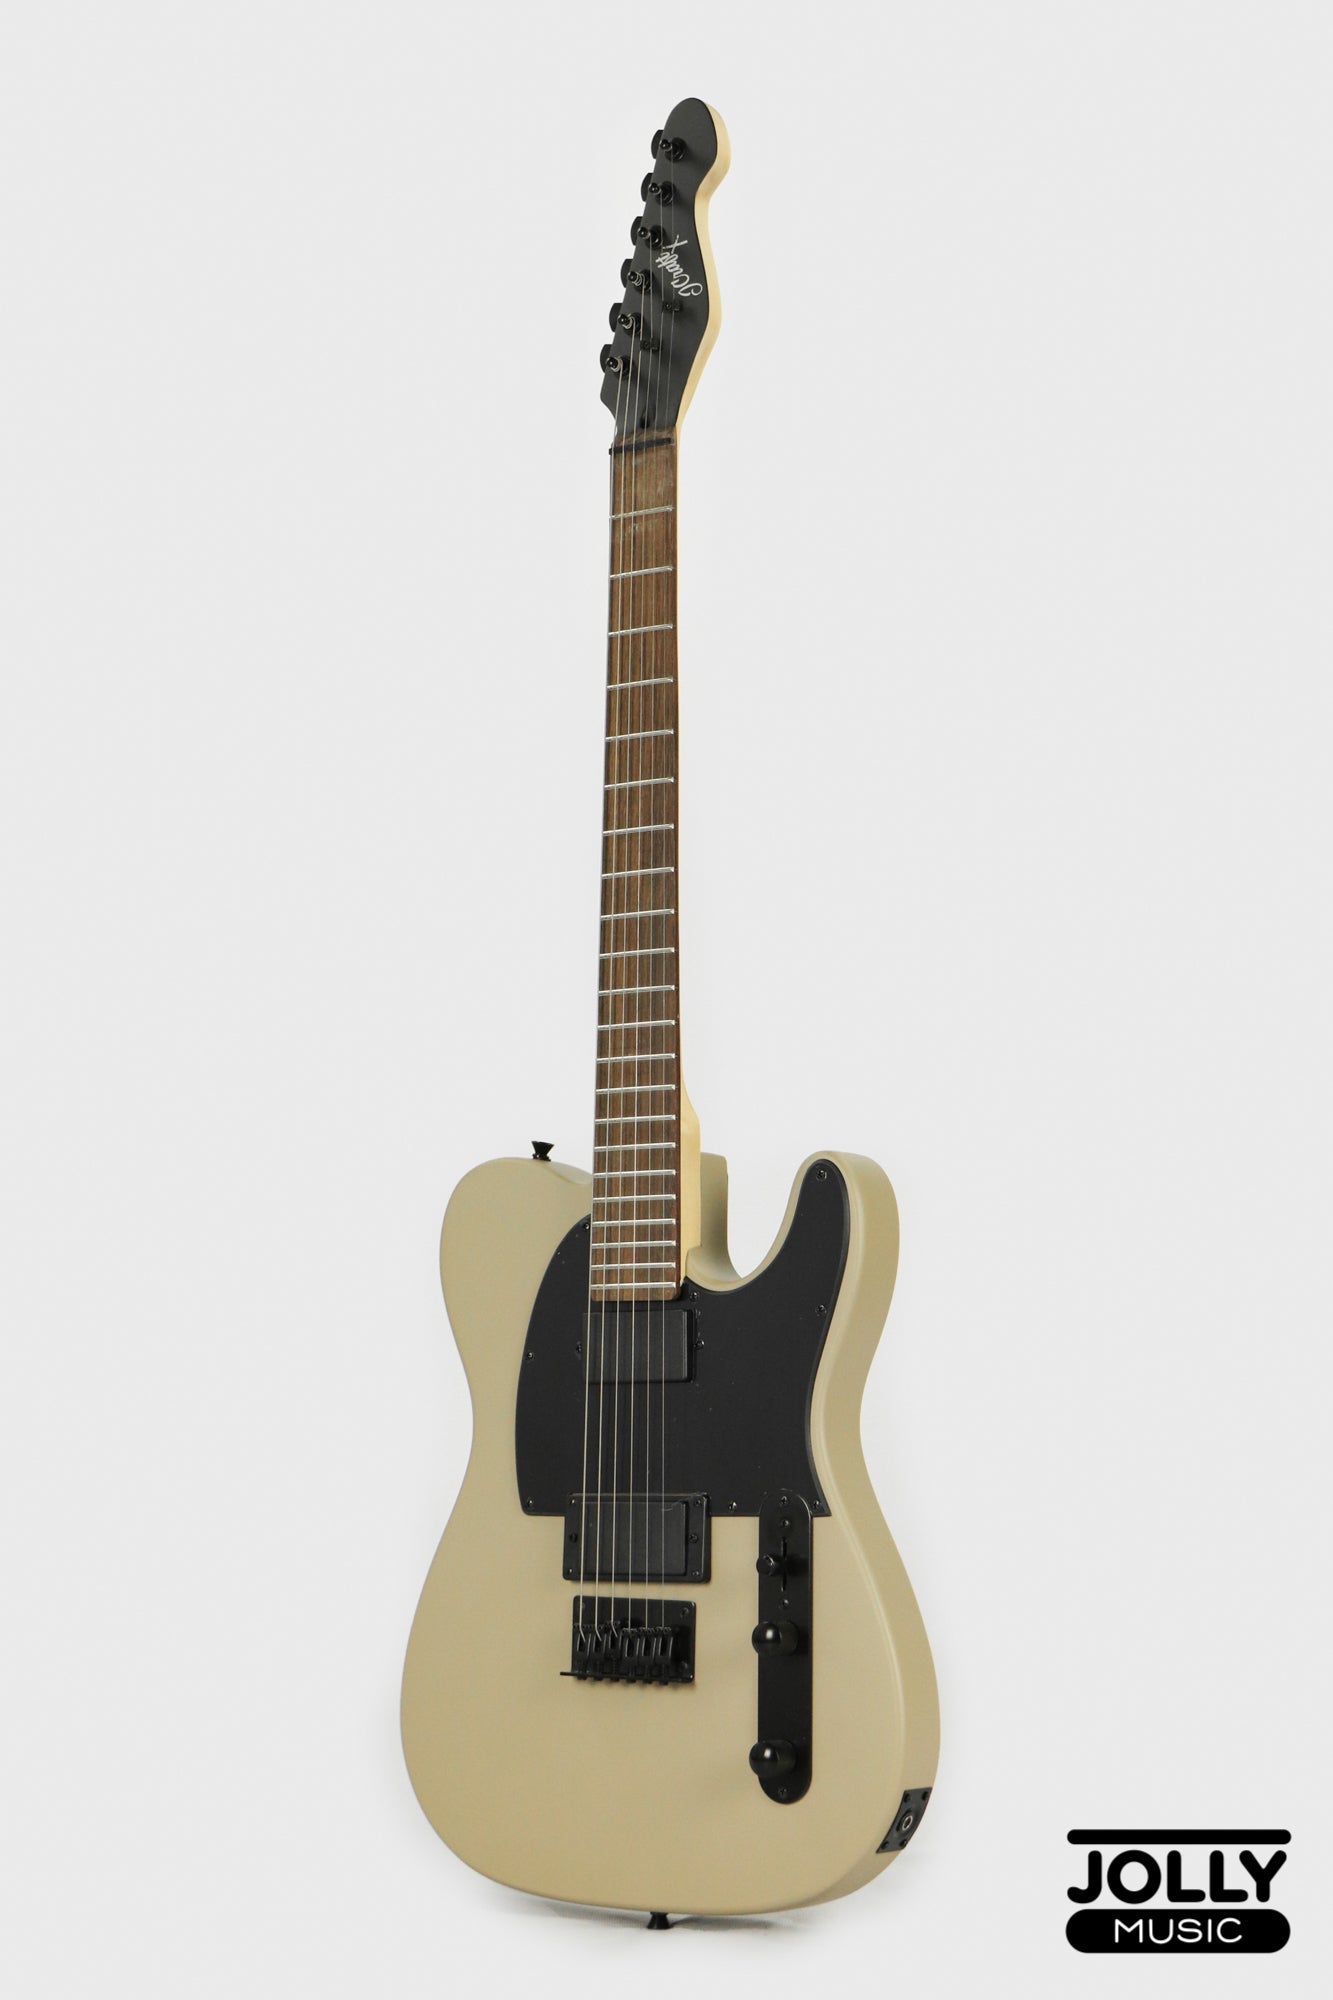 JCraft X Series LTX-1 Electric Guitar - Satin Sandstorm